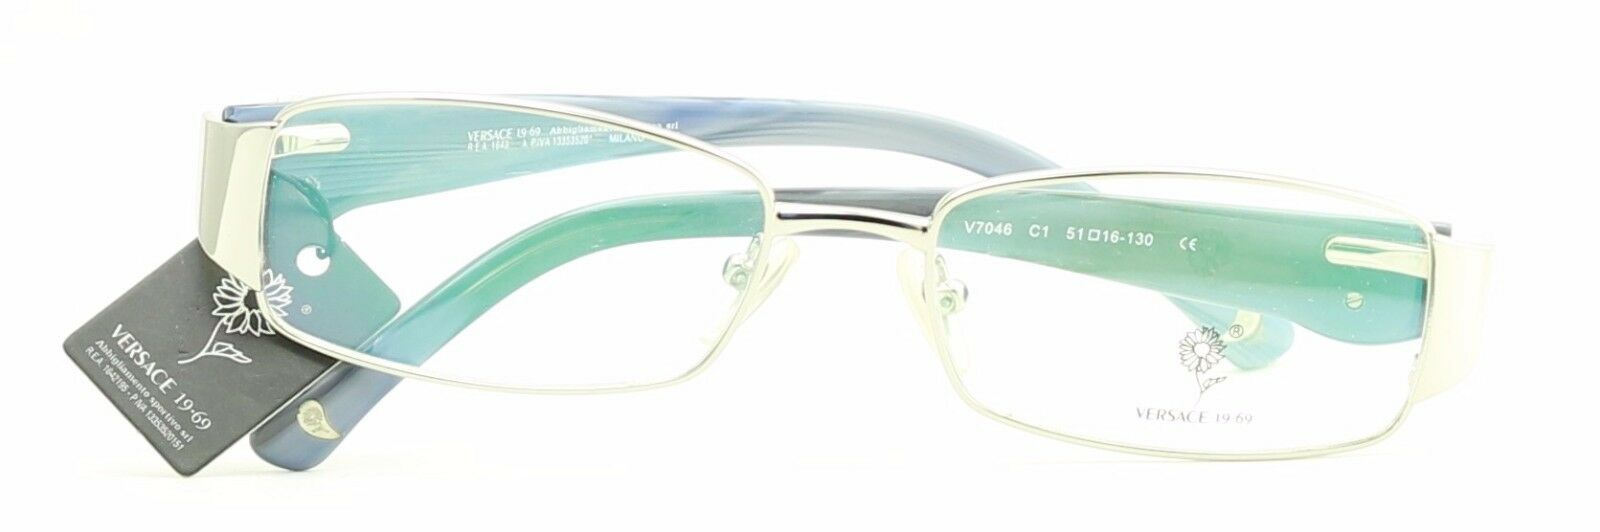 VERSACE V7046 C1 Eyewear FRAMES NEW Glasses RX Optical Eyeglasses Italy - BNIB